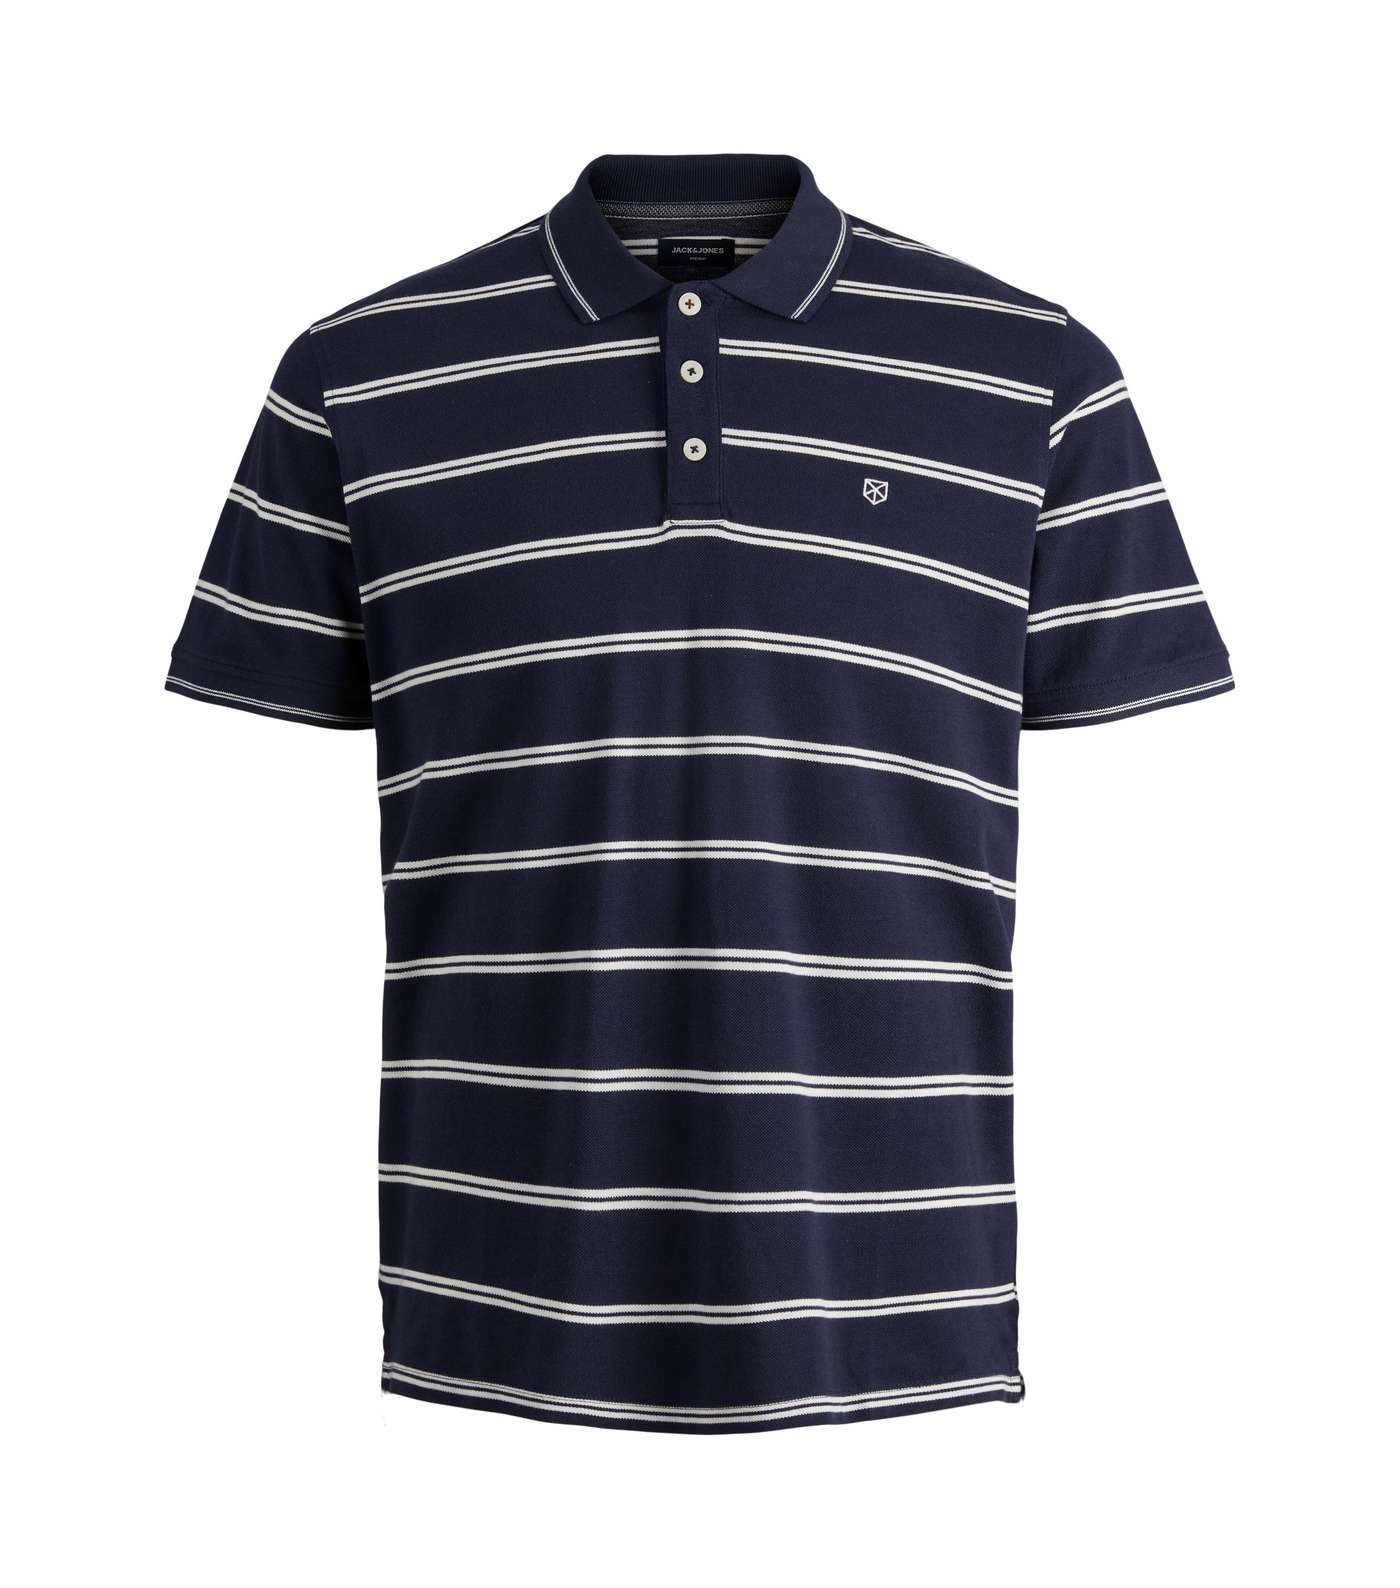 Jack & Jones Navy Stripe Polo Shirt Image 2